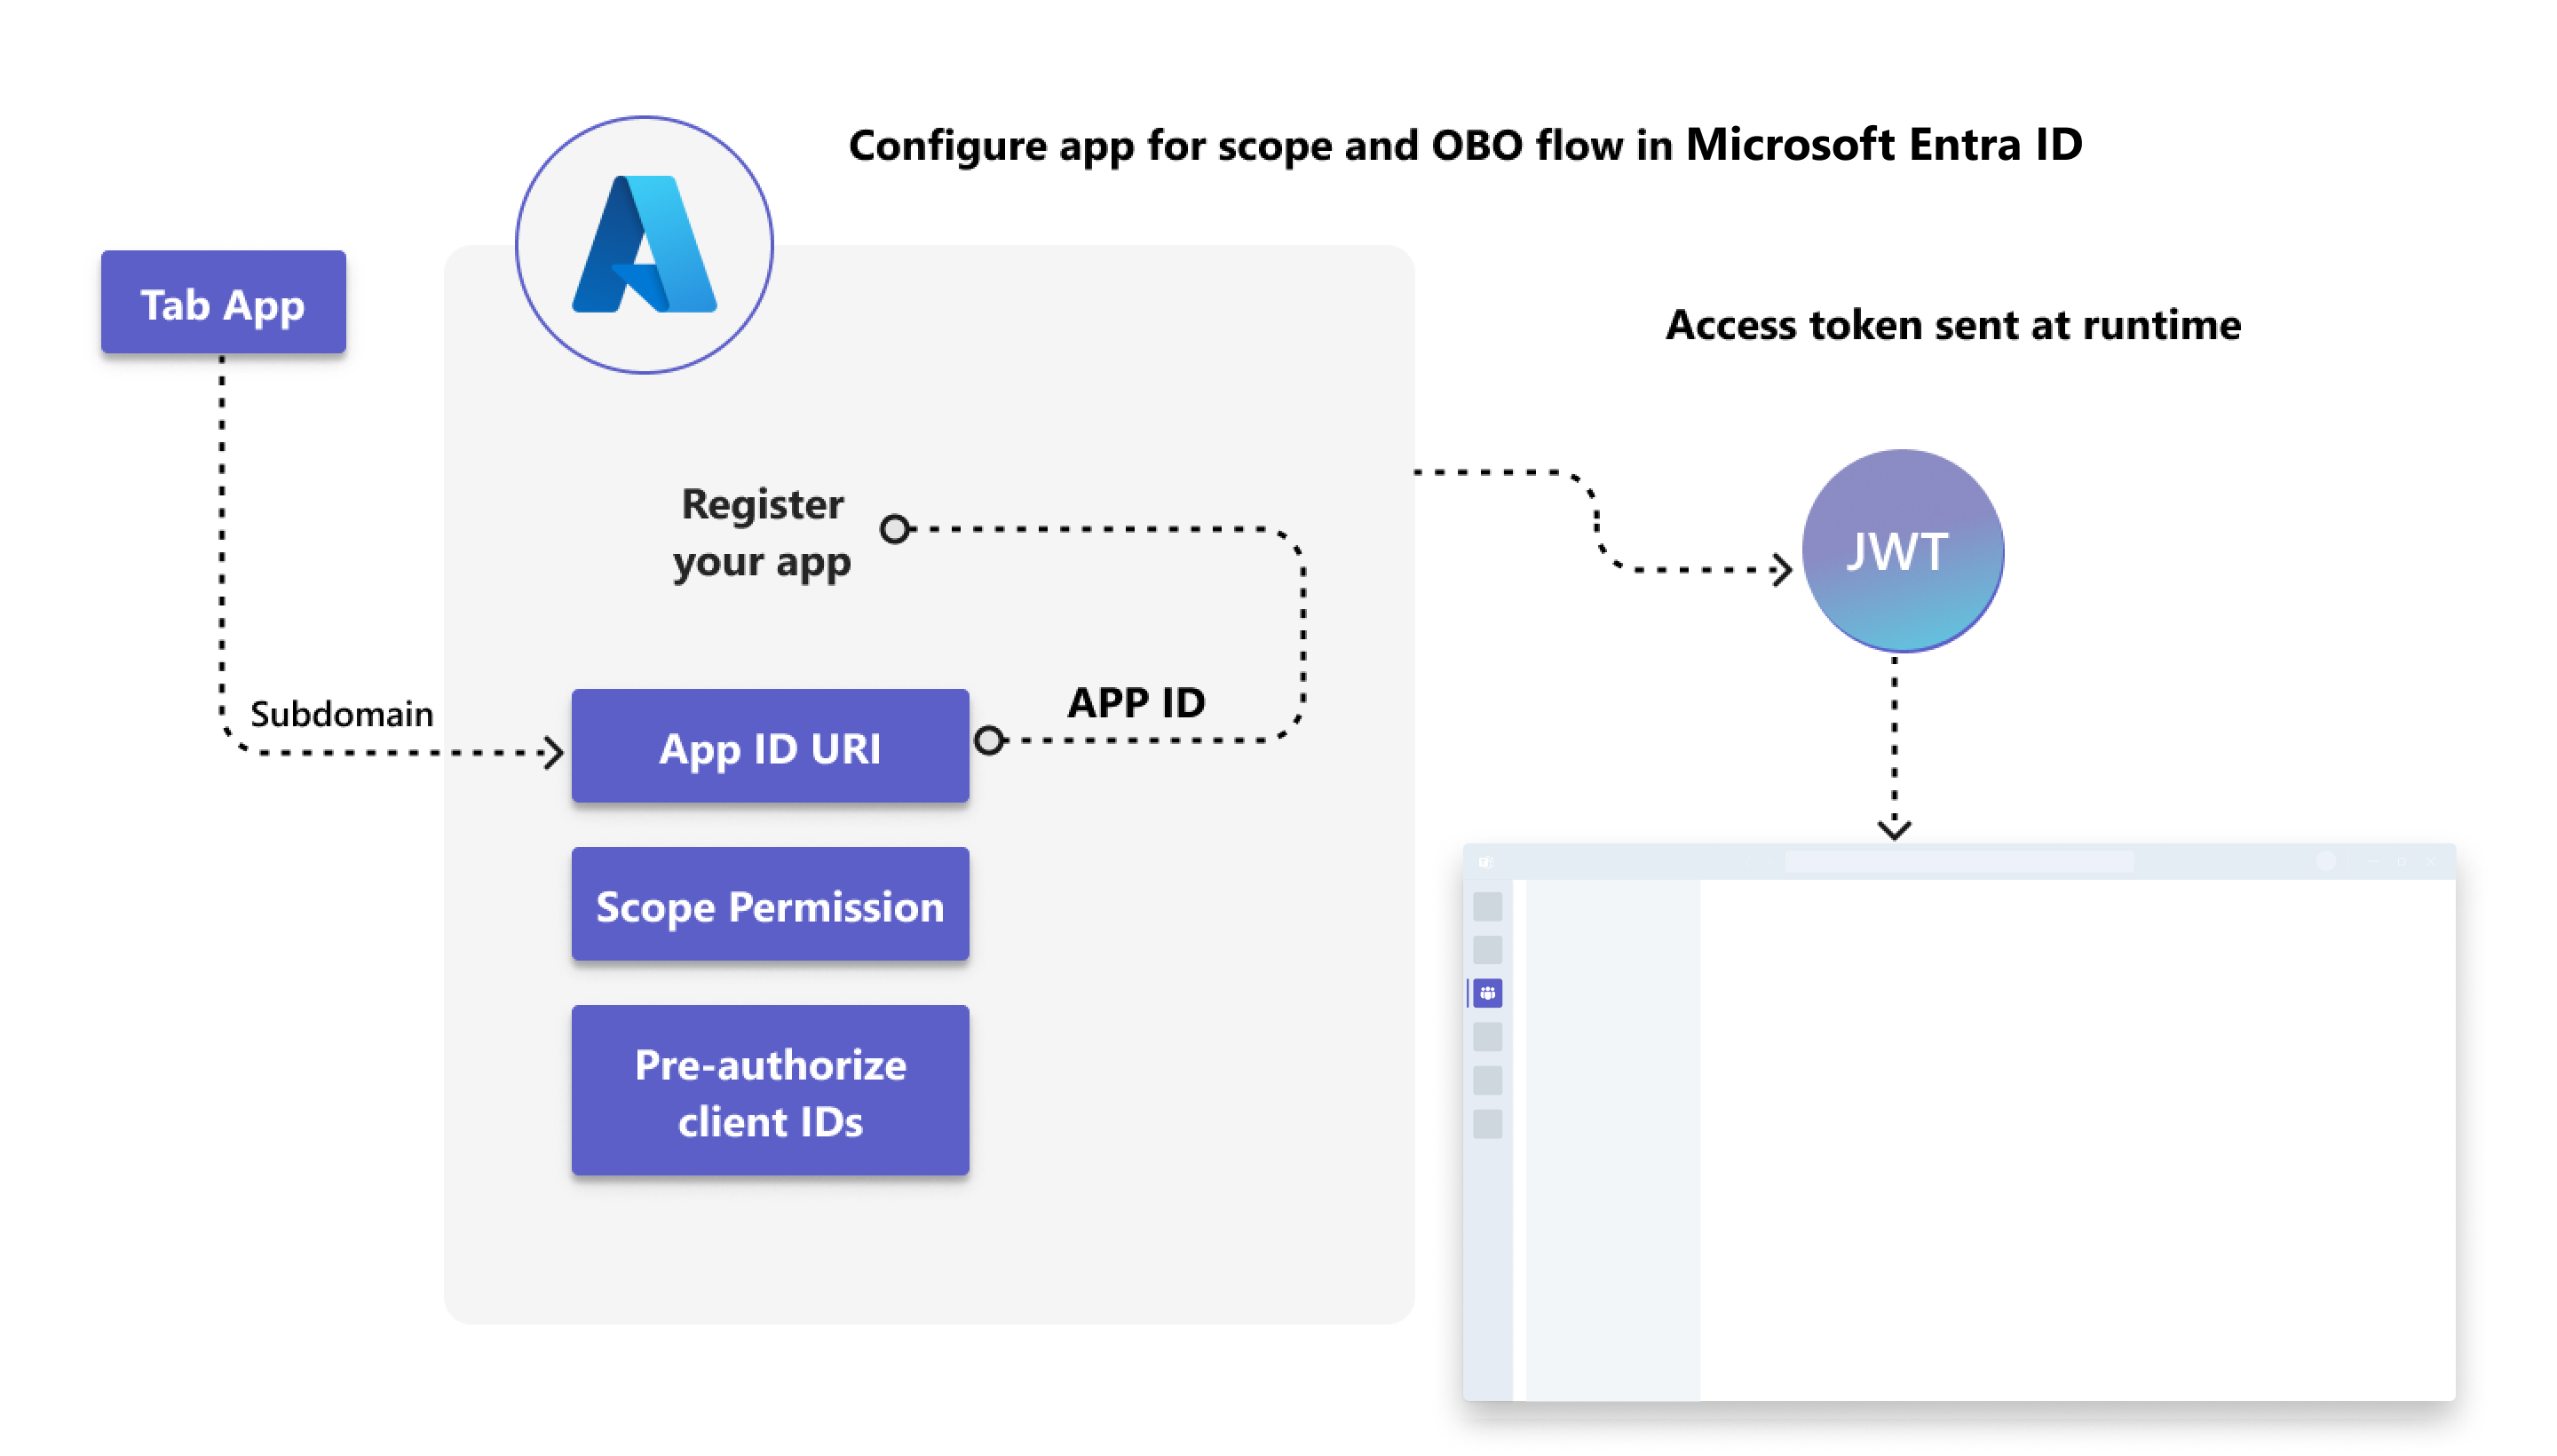 Configure Microsoft Entra ID to send access token to Teams Client app